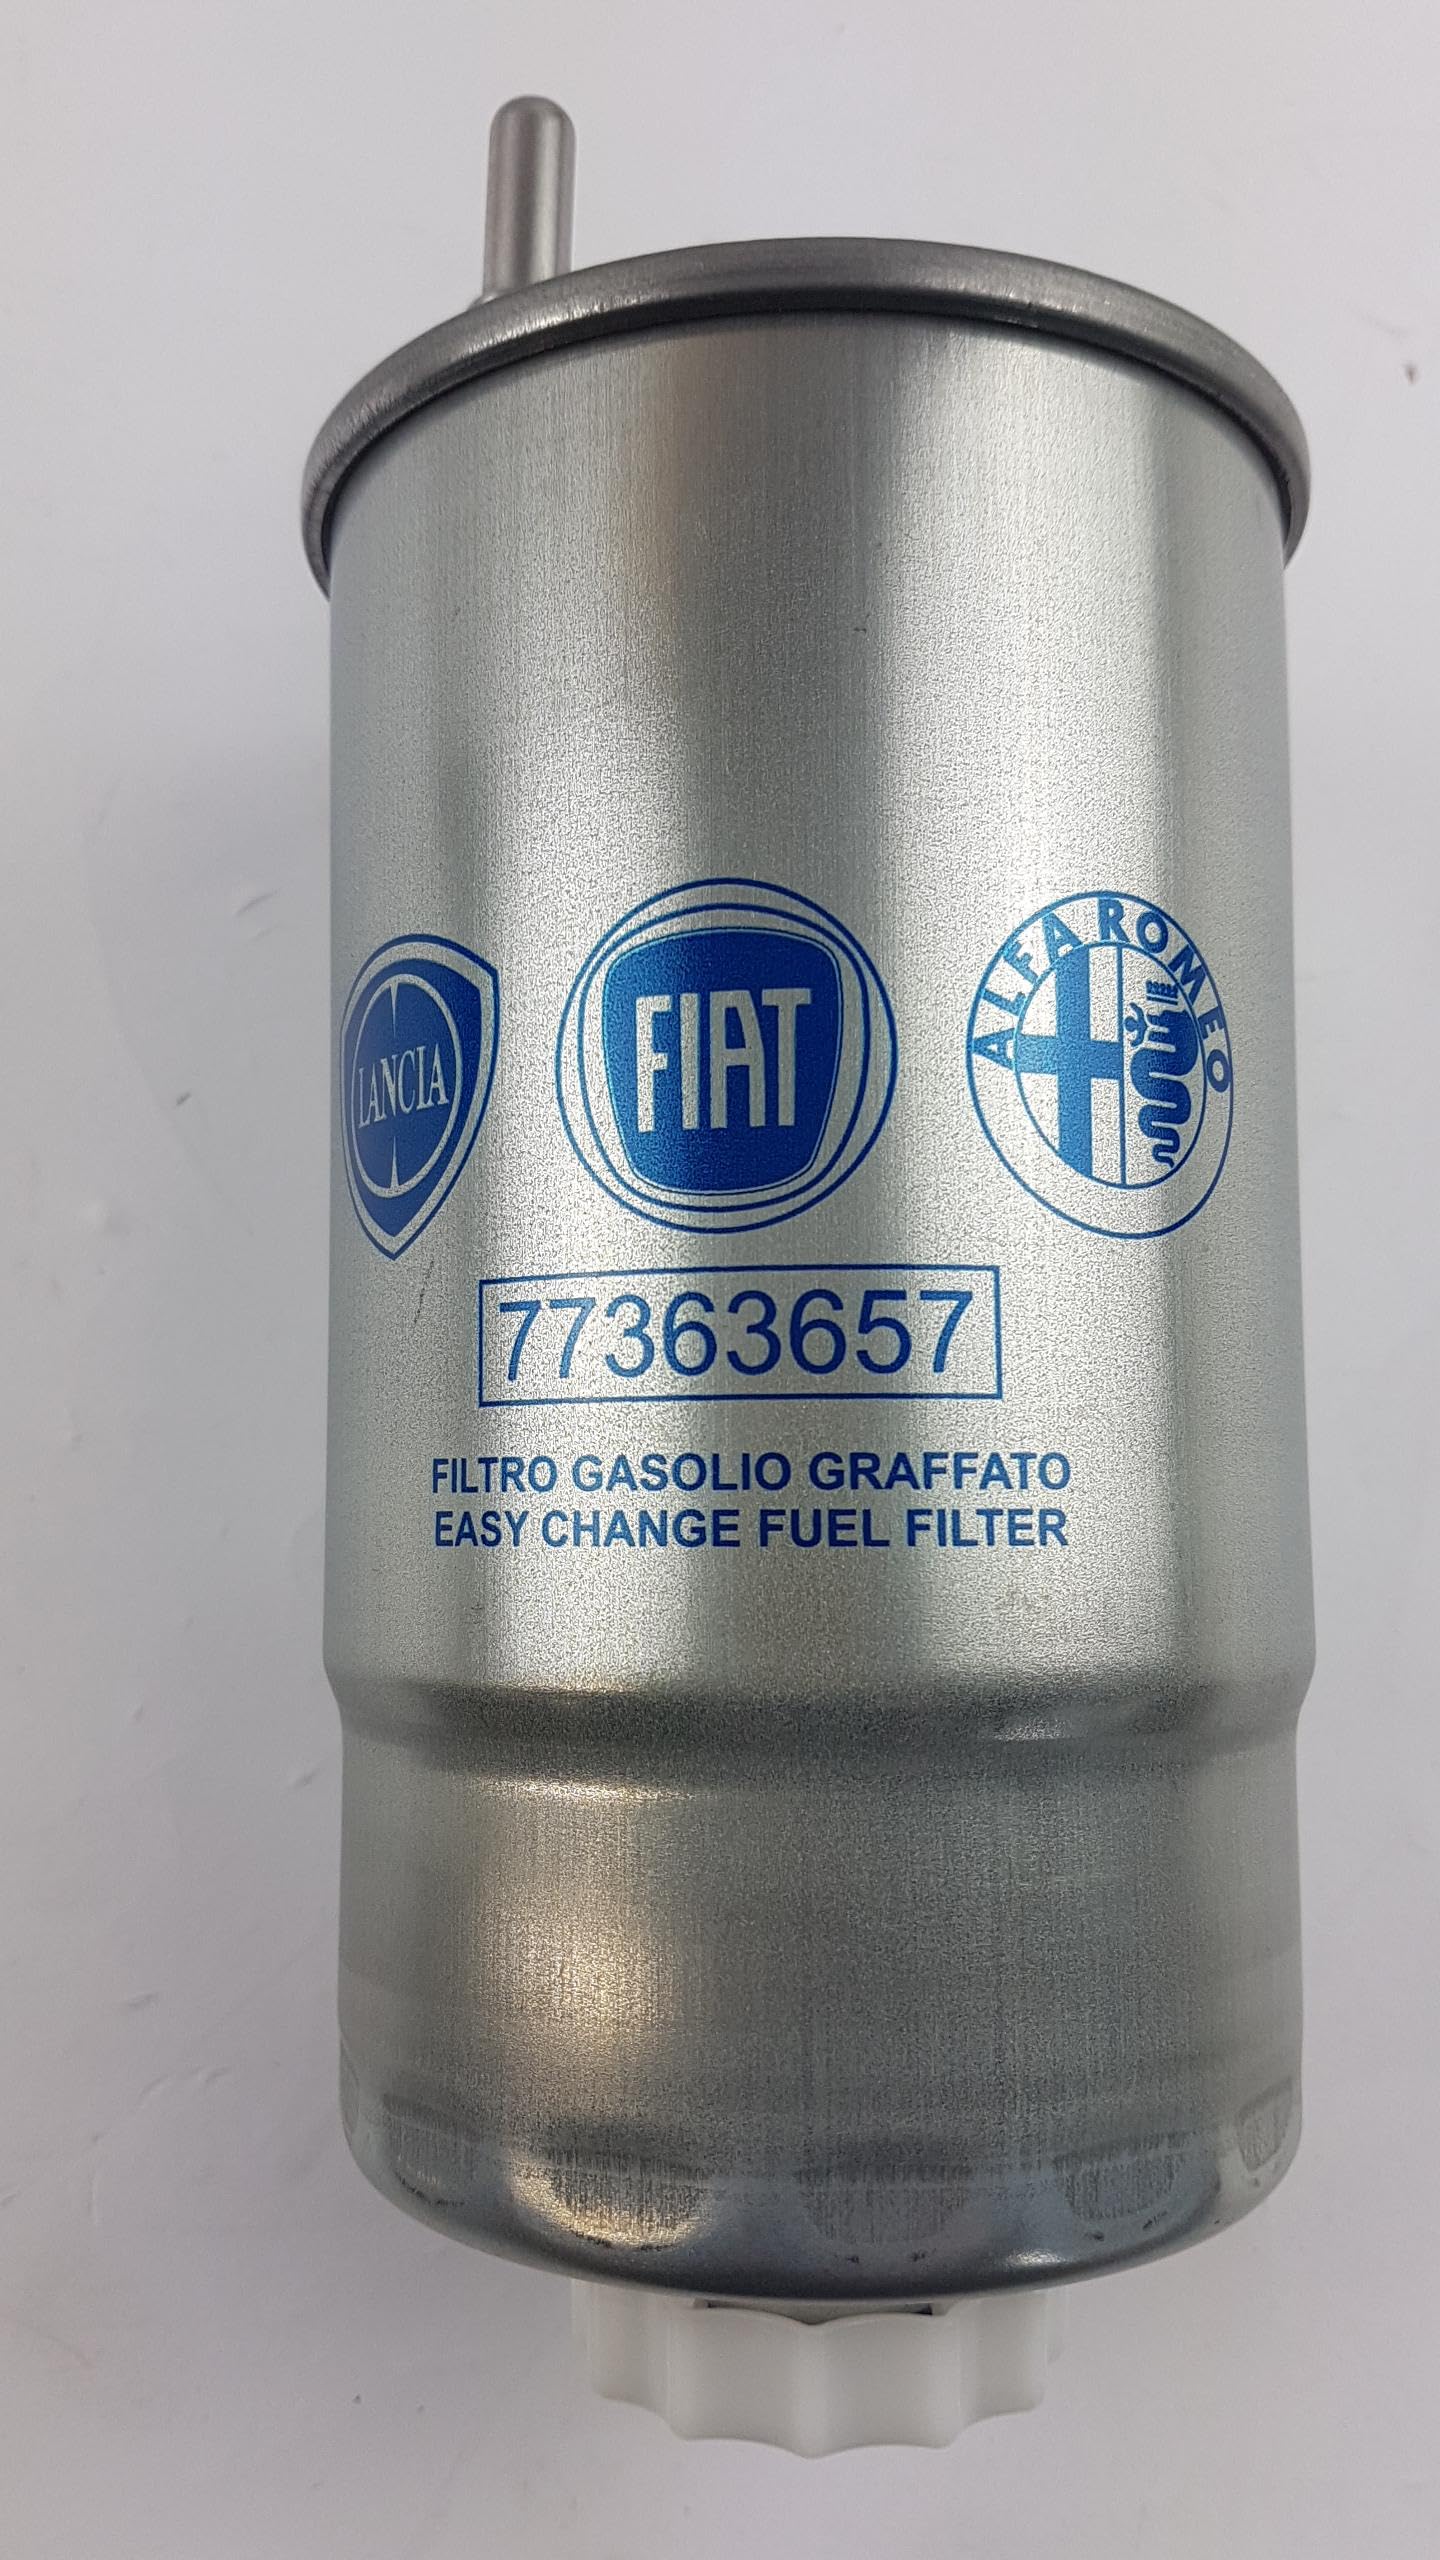 Original Fiat Ducato (250) 2,3 D Multijet Dieselfilter Kraftstofffilter - 77363657 von Fiat